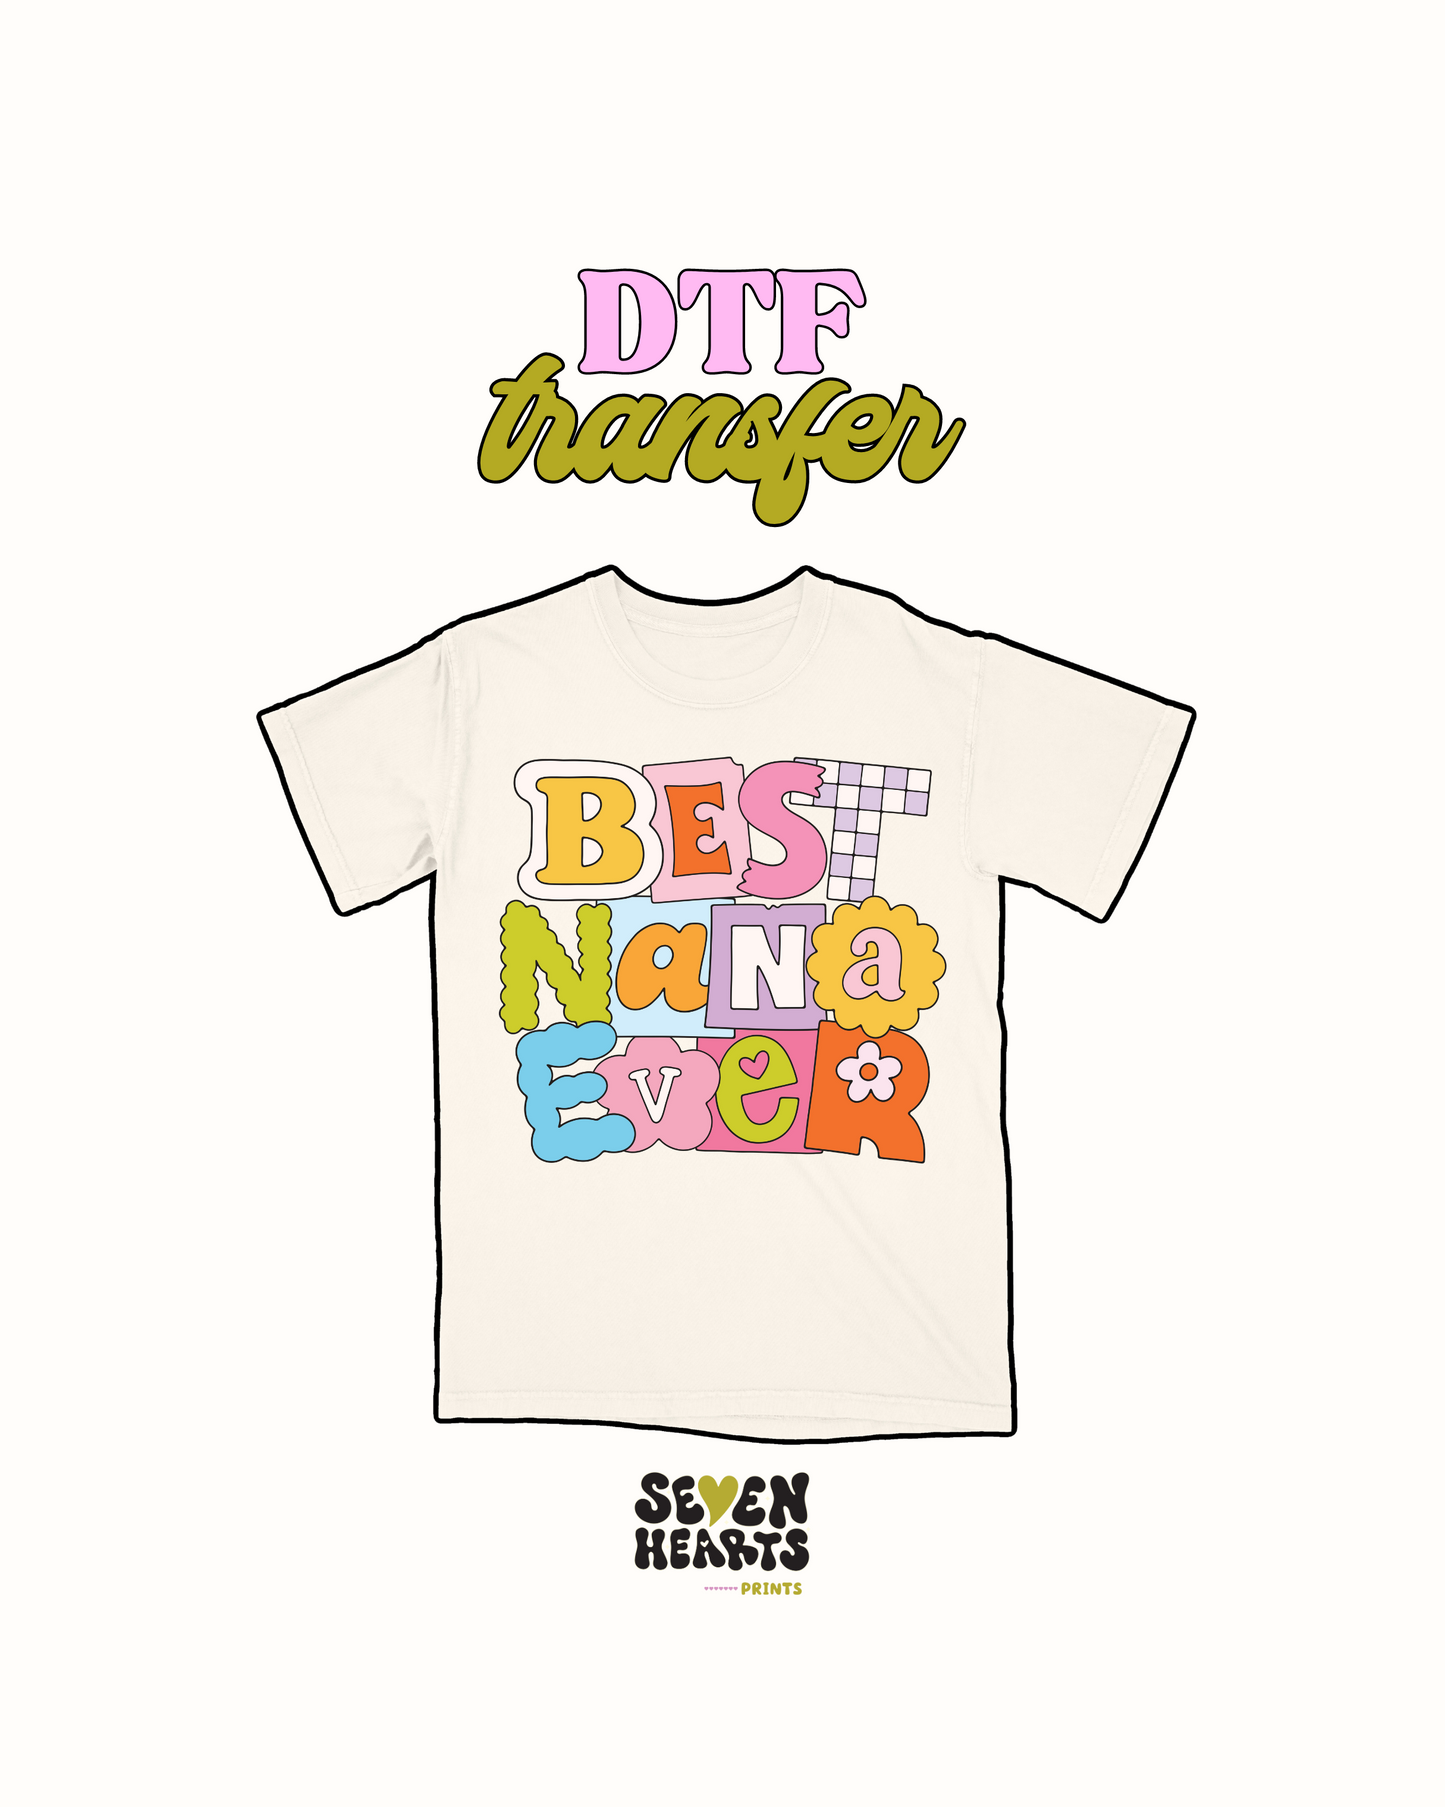 Best nana Ever - DTF Transfer